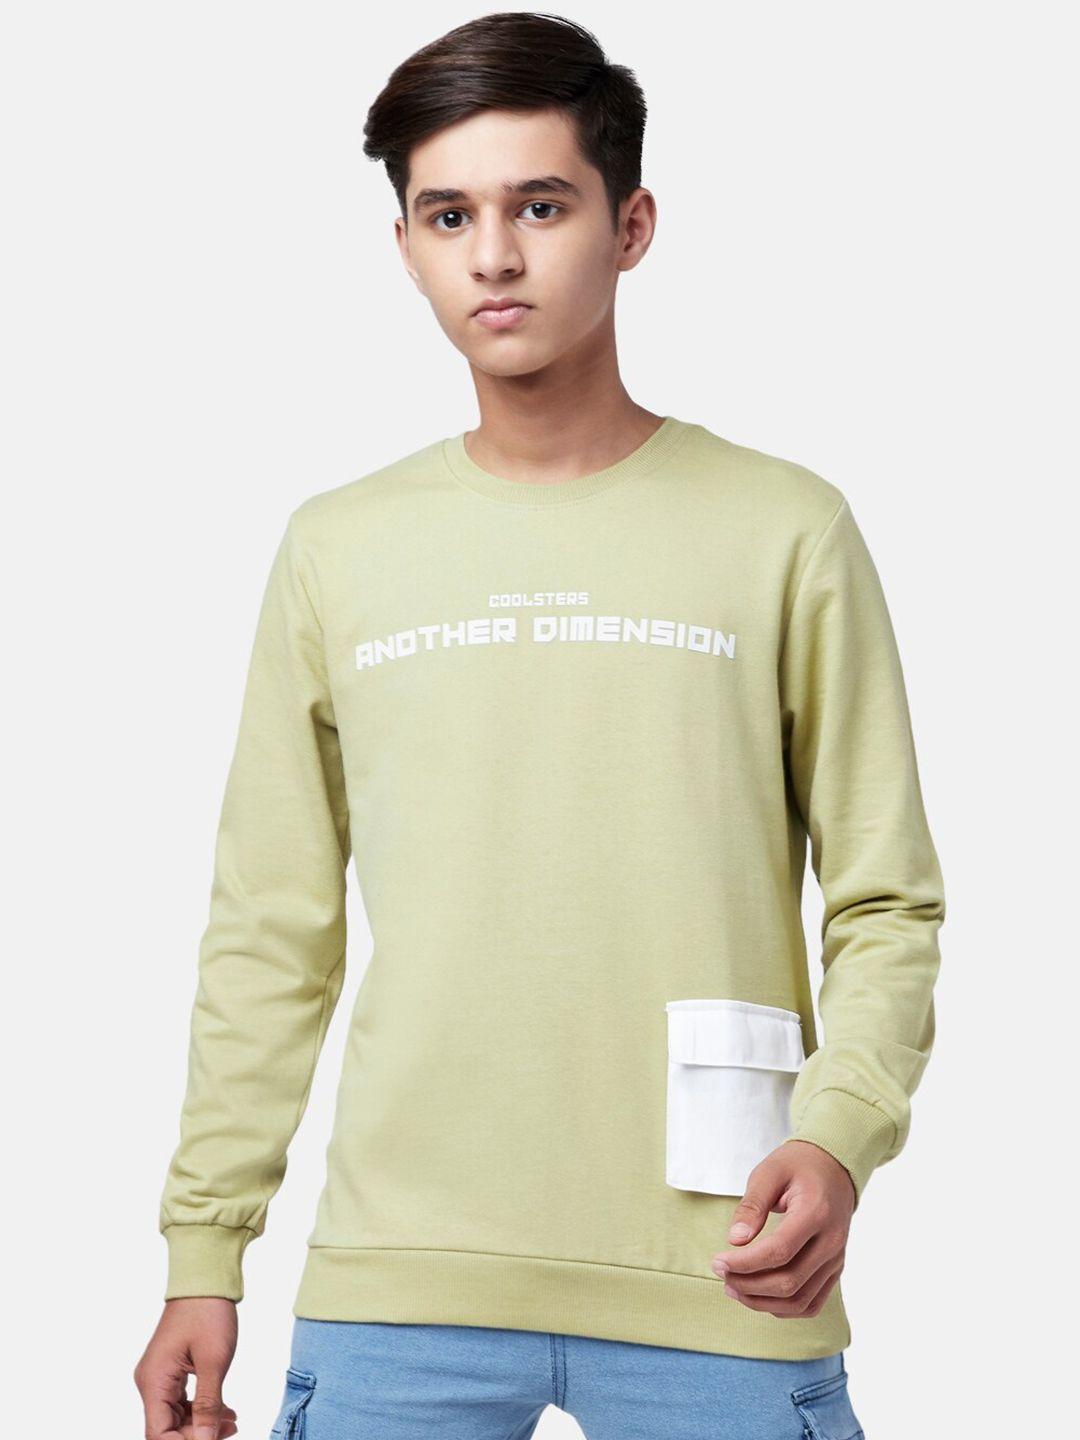 coolsters by pantaloons boys khaki printed cotton sweatshirt